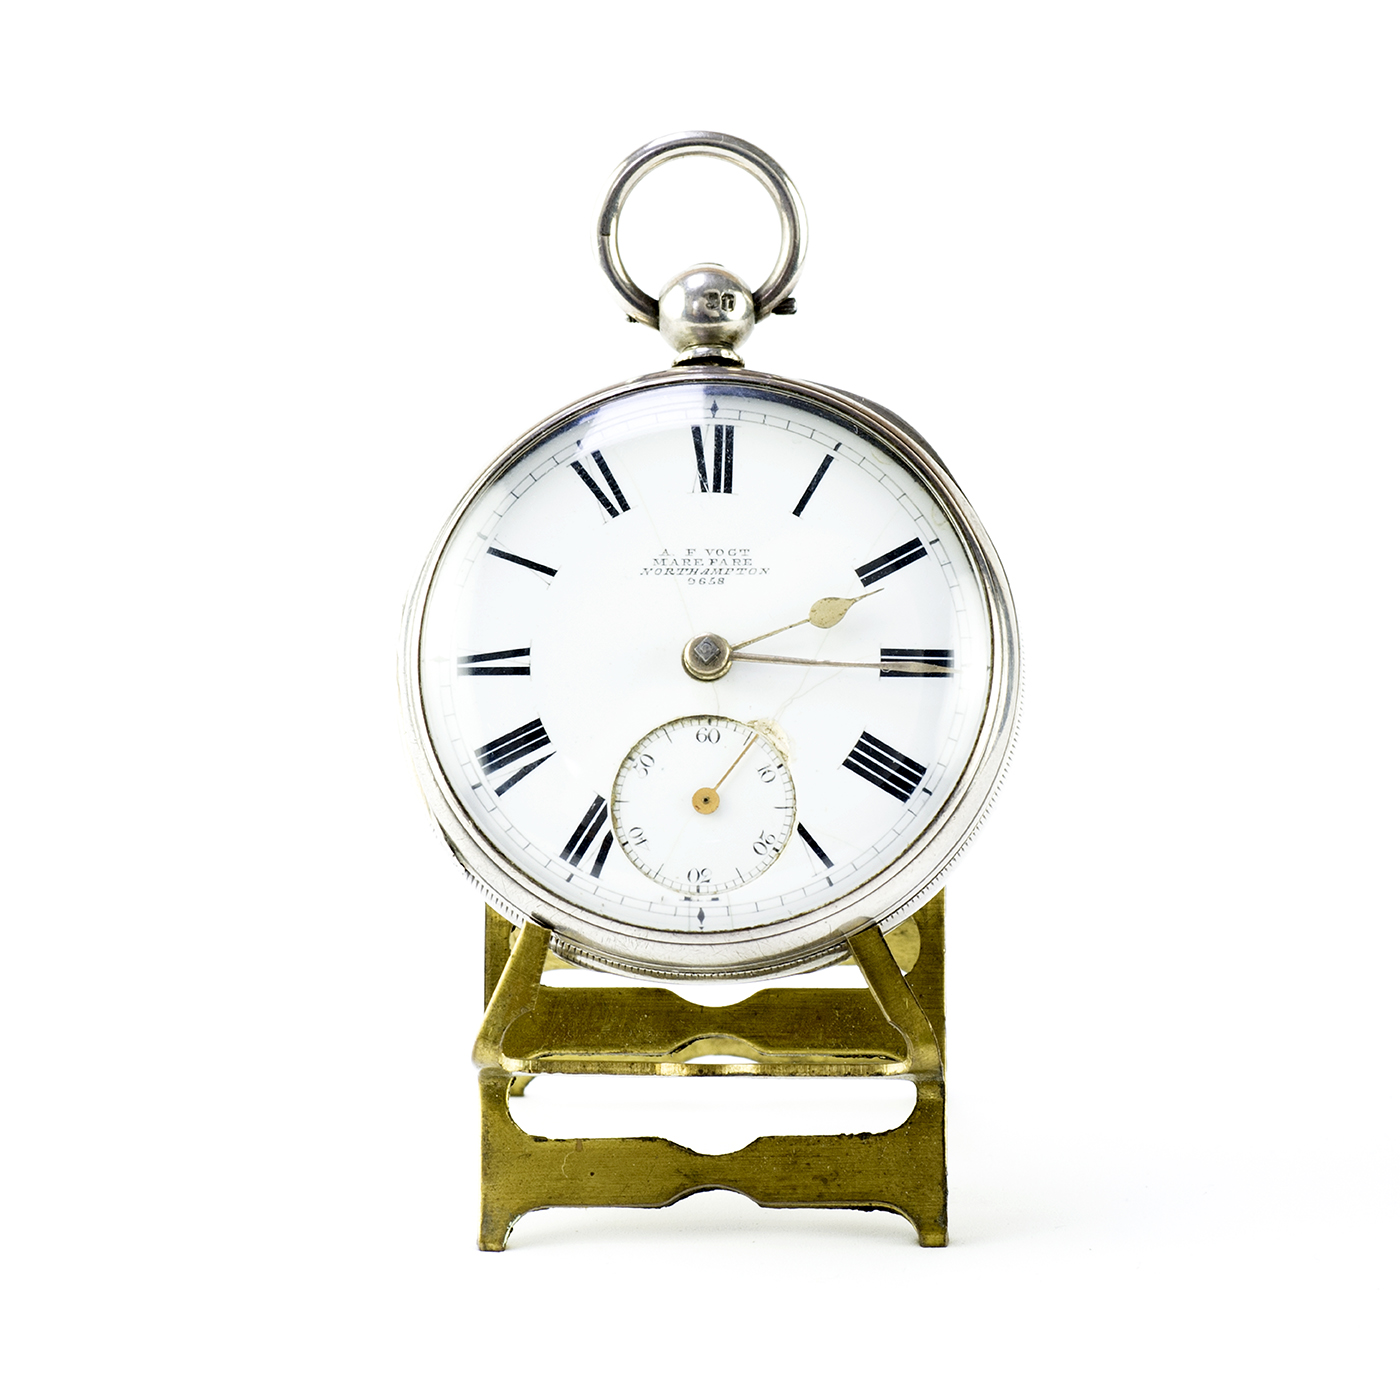 A.F. VOGT (Nothampton). Reloj de Bolsillo, lepine, Half Fusee (Semicatalino). Londres, año 1872.